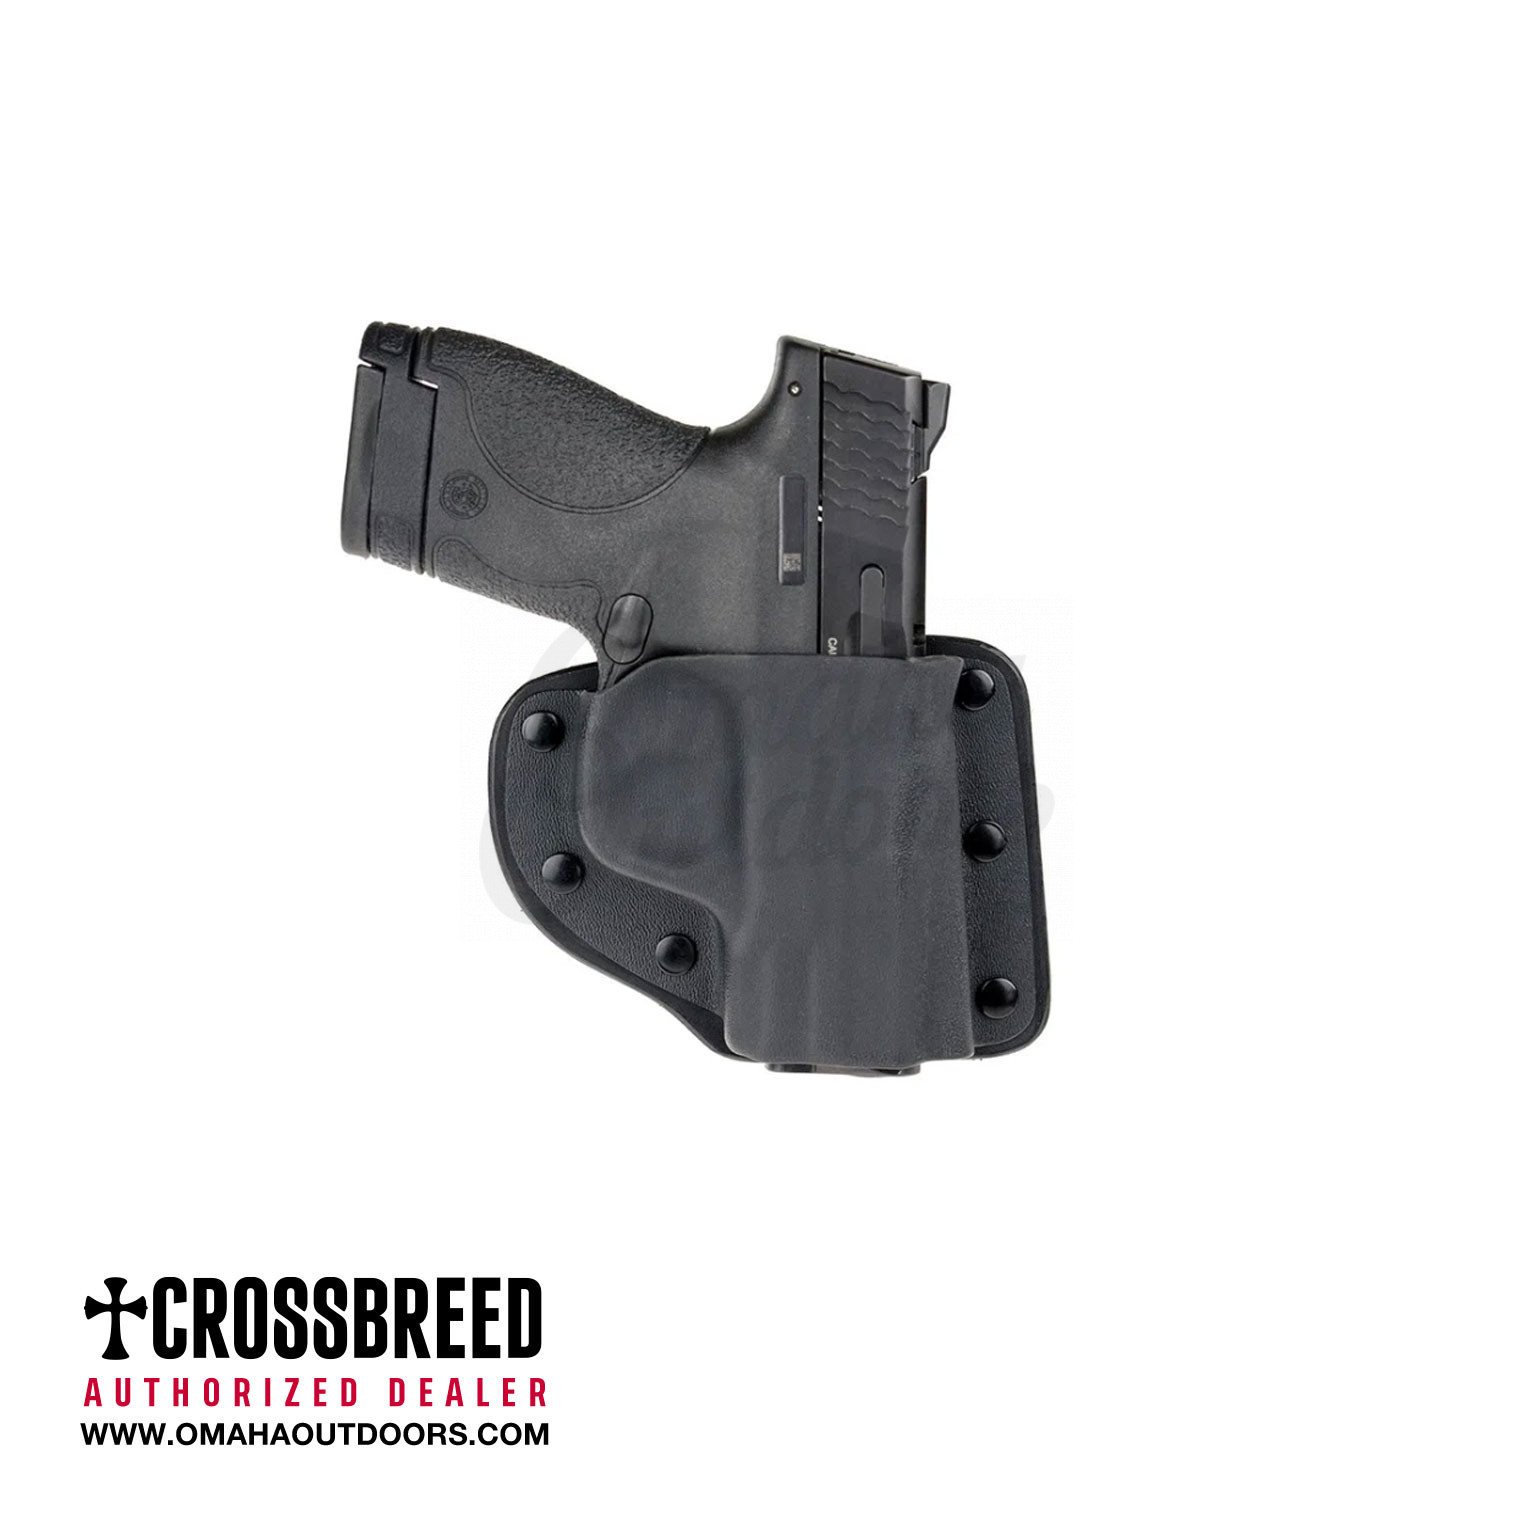 For Belts Up To 1.5" MAG POUCH FOR S&W M&P SHIELD M2.0 9/40 RH SHOOTER 